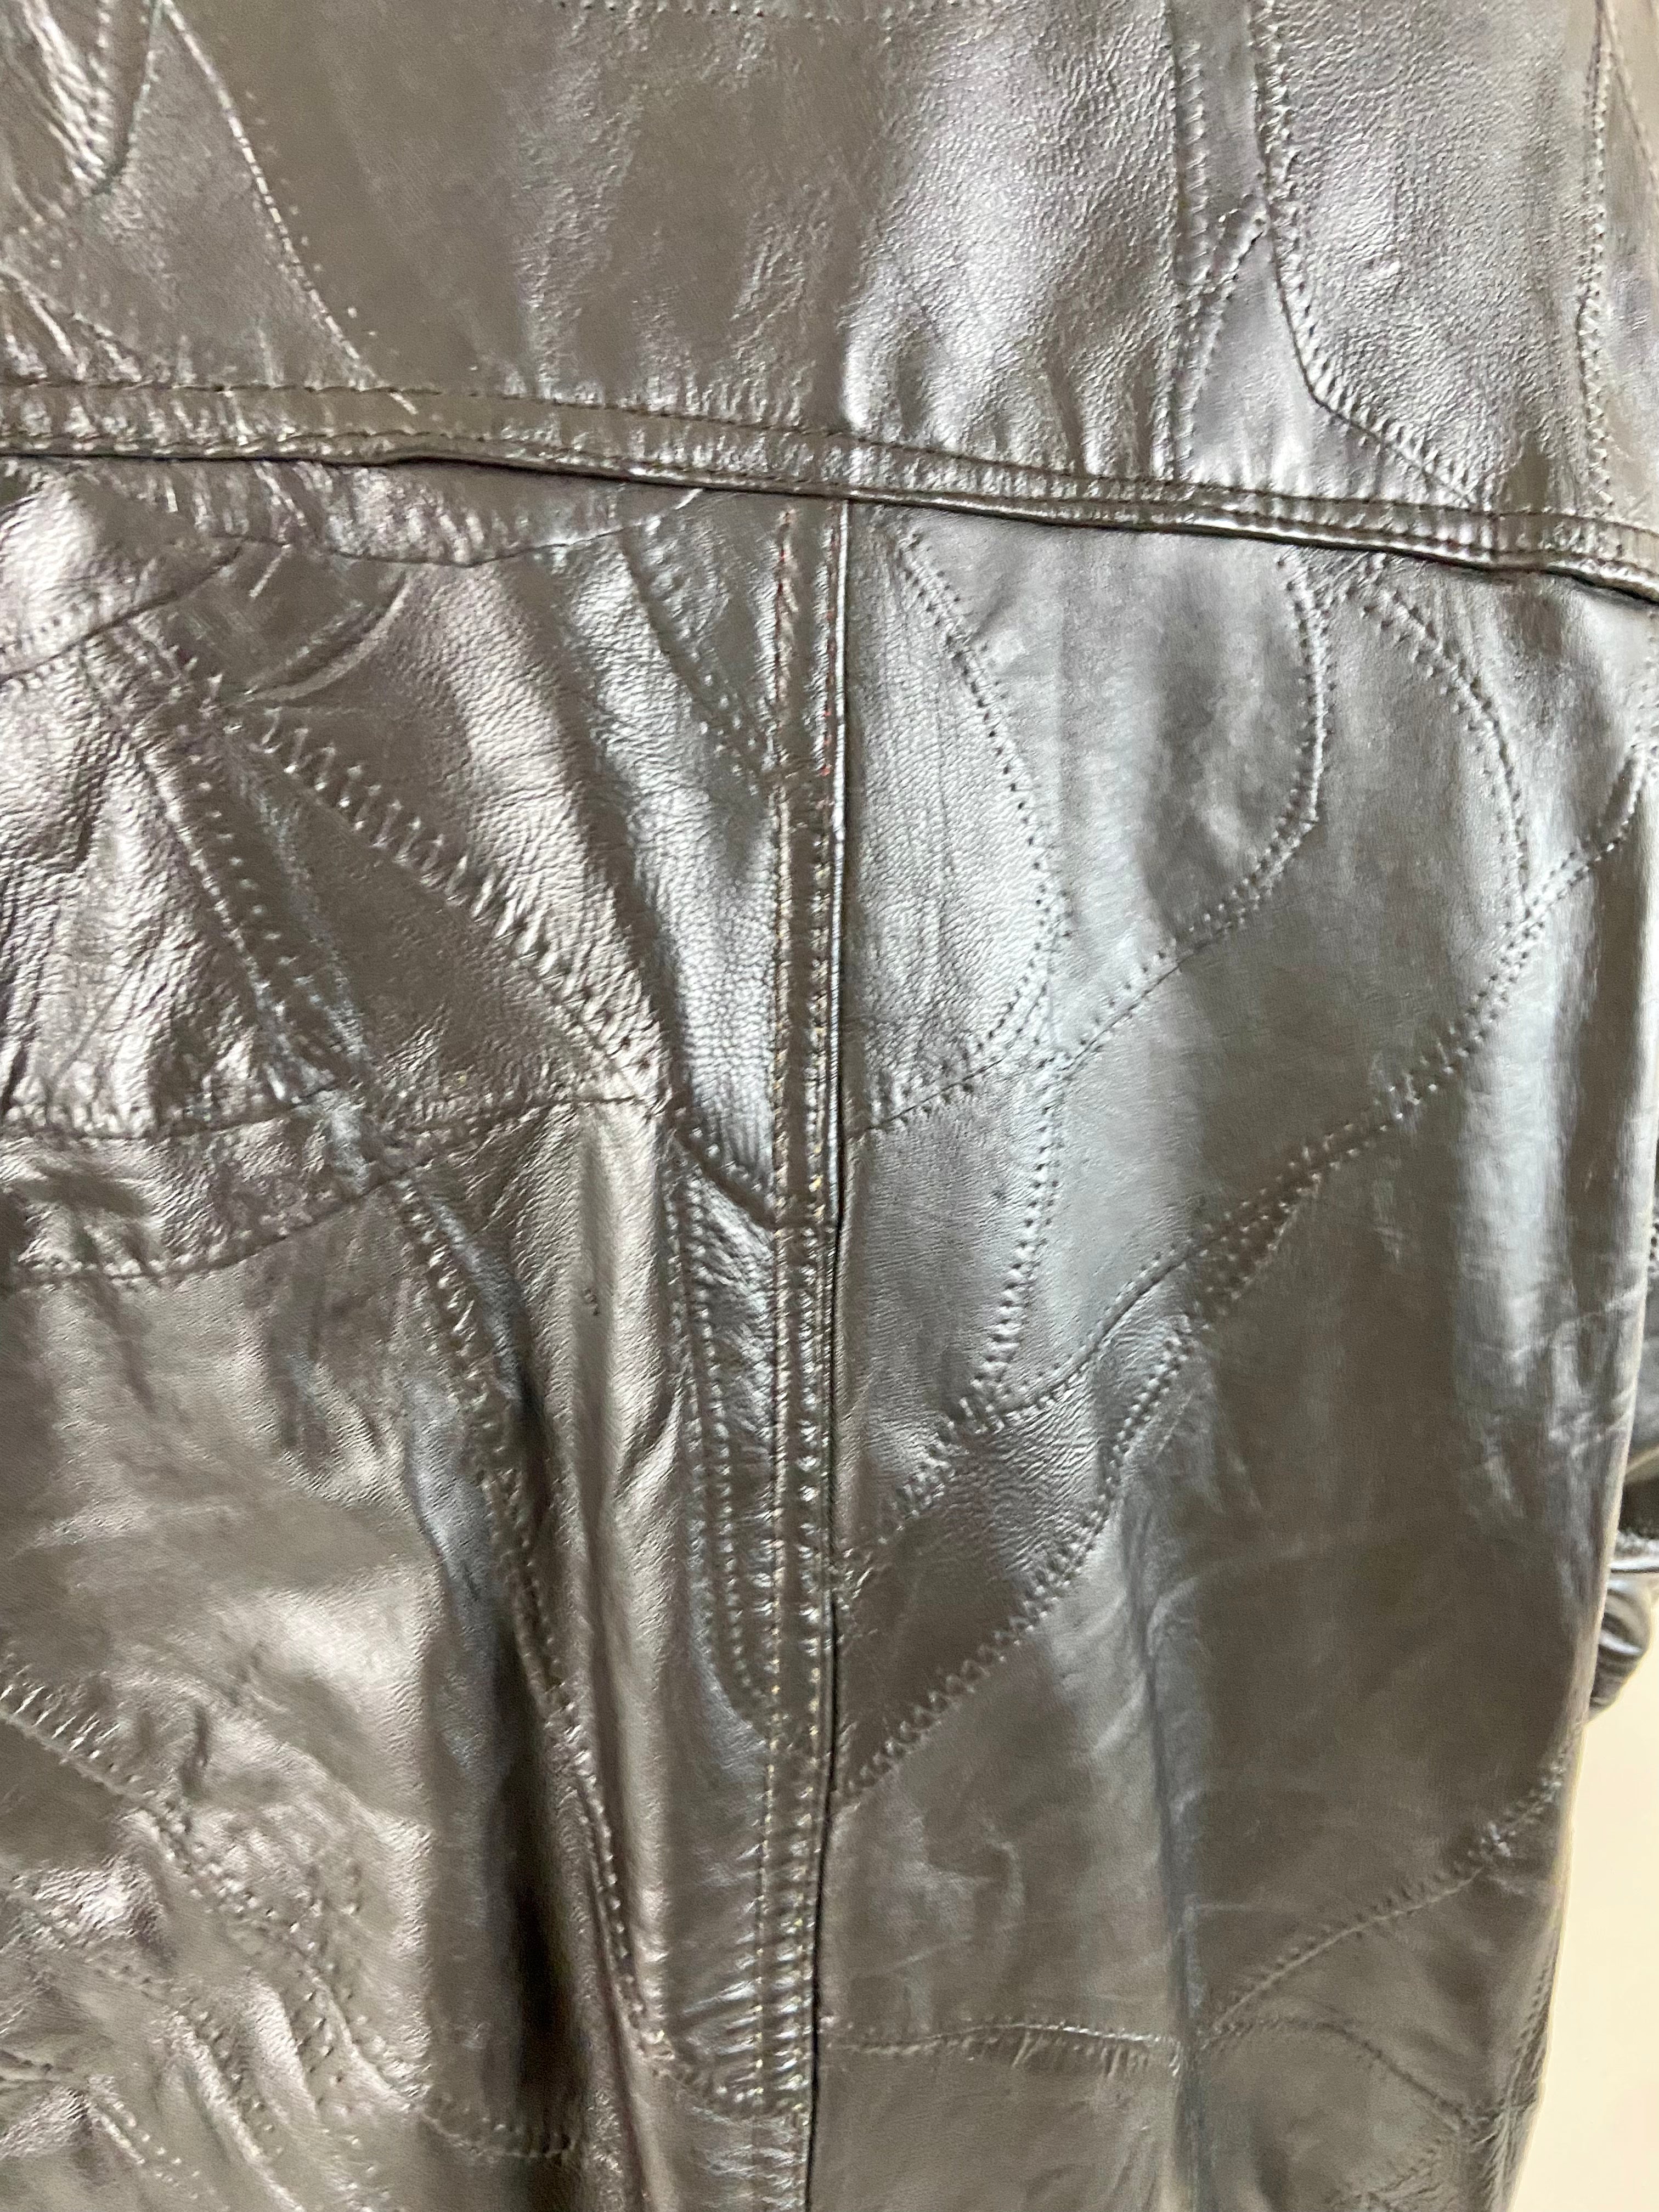 Over size black leather jacket